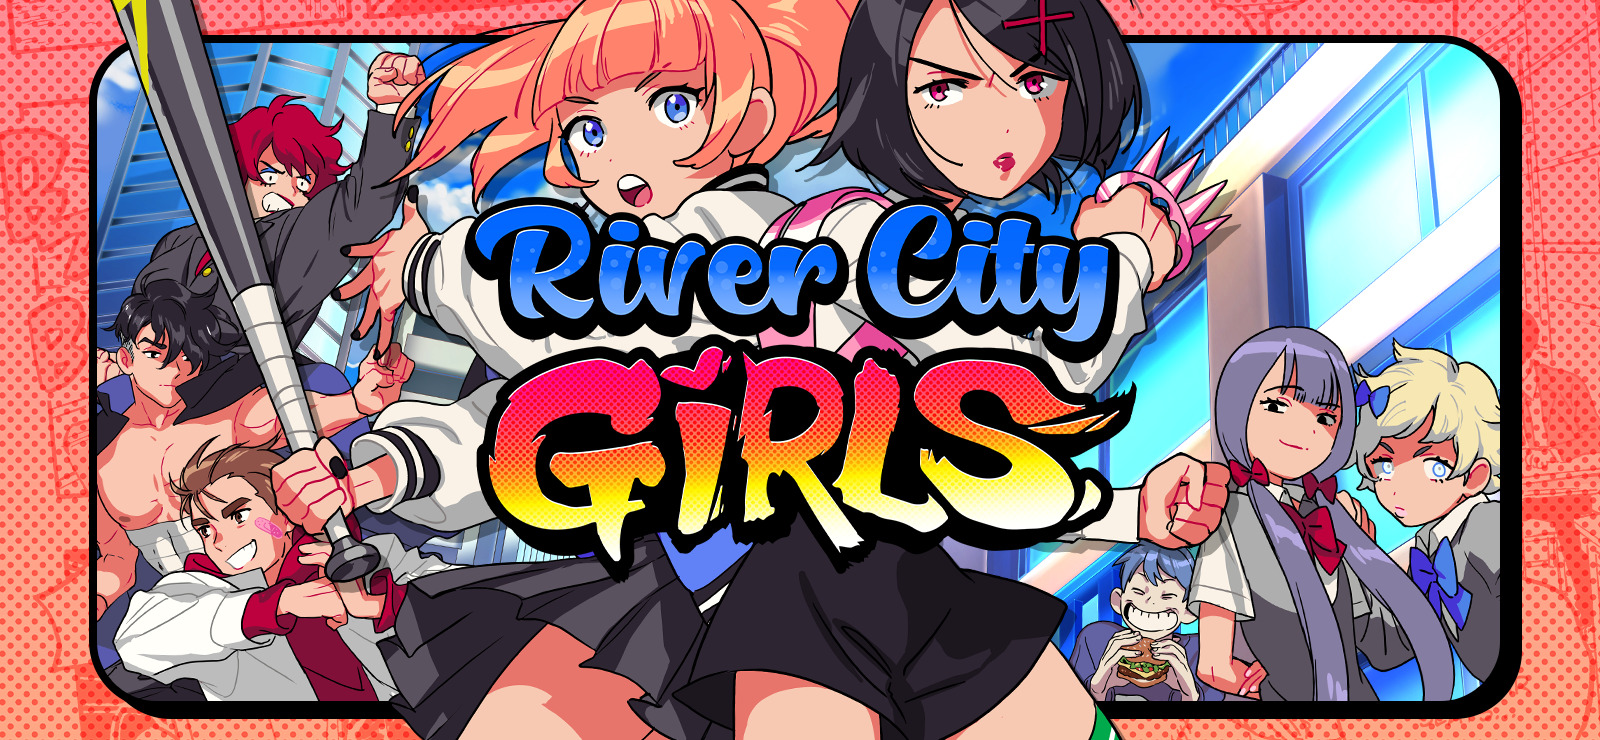 T me cracked combos. River City girls игра. River City girls обложка. River City girls Zero. River City girls 2.